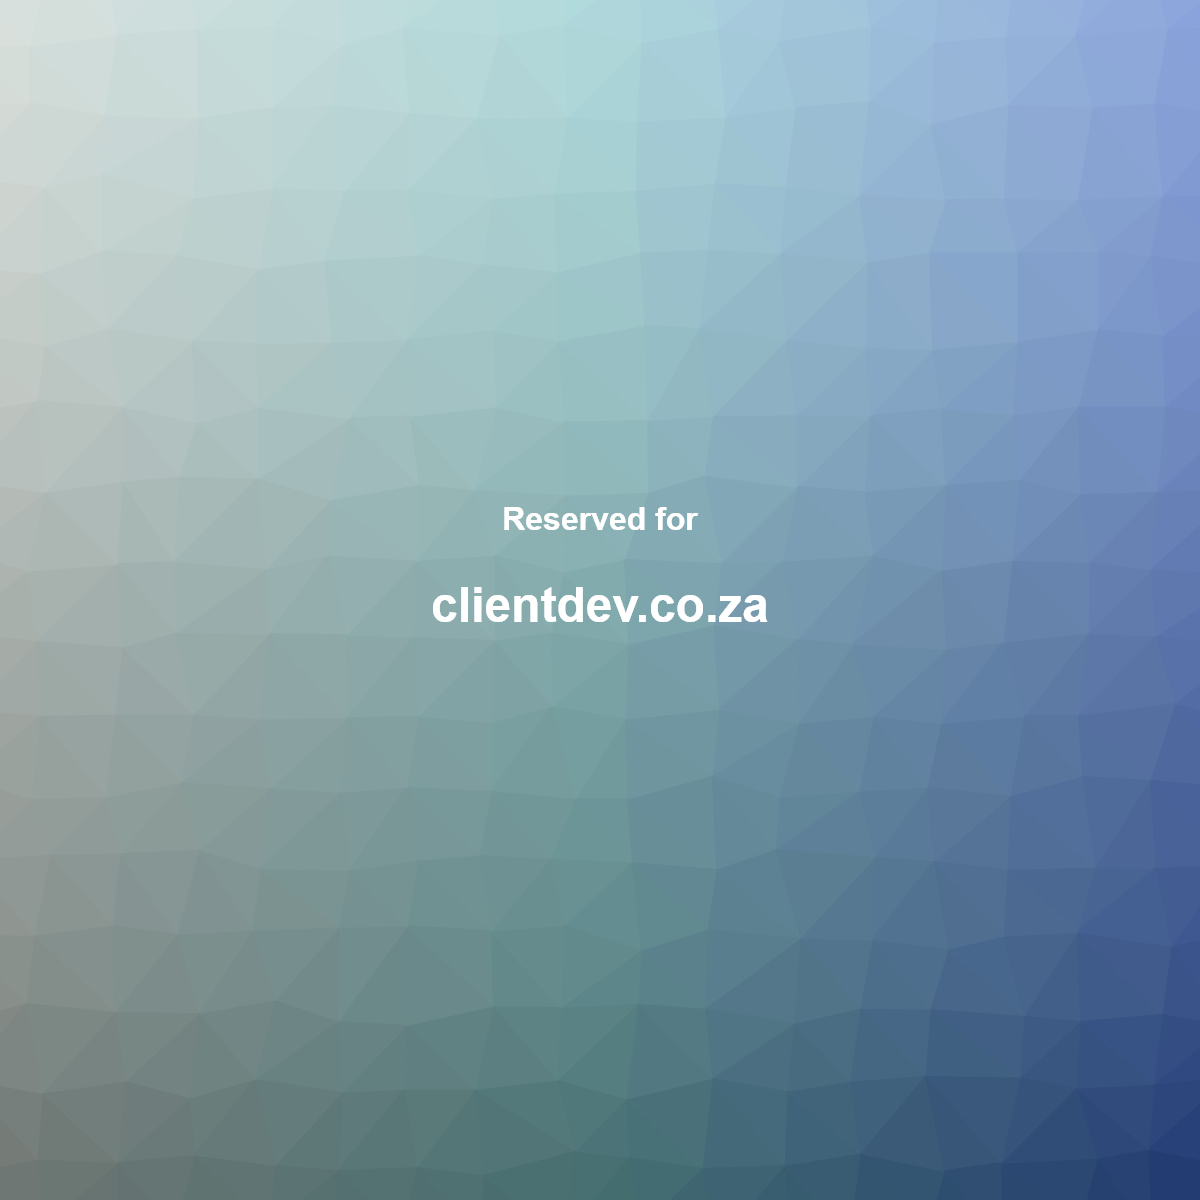 A complete backup of clientdev.co.za